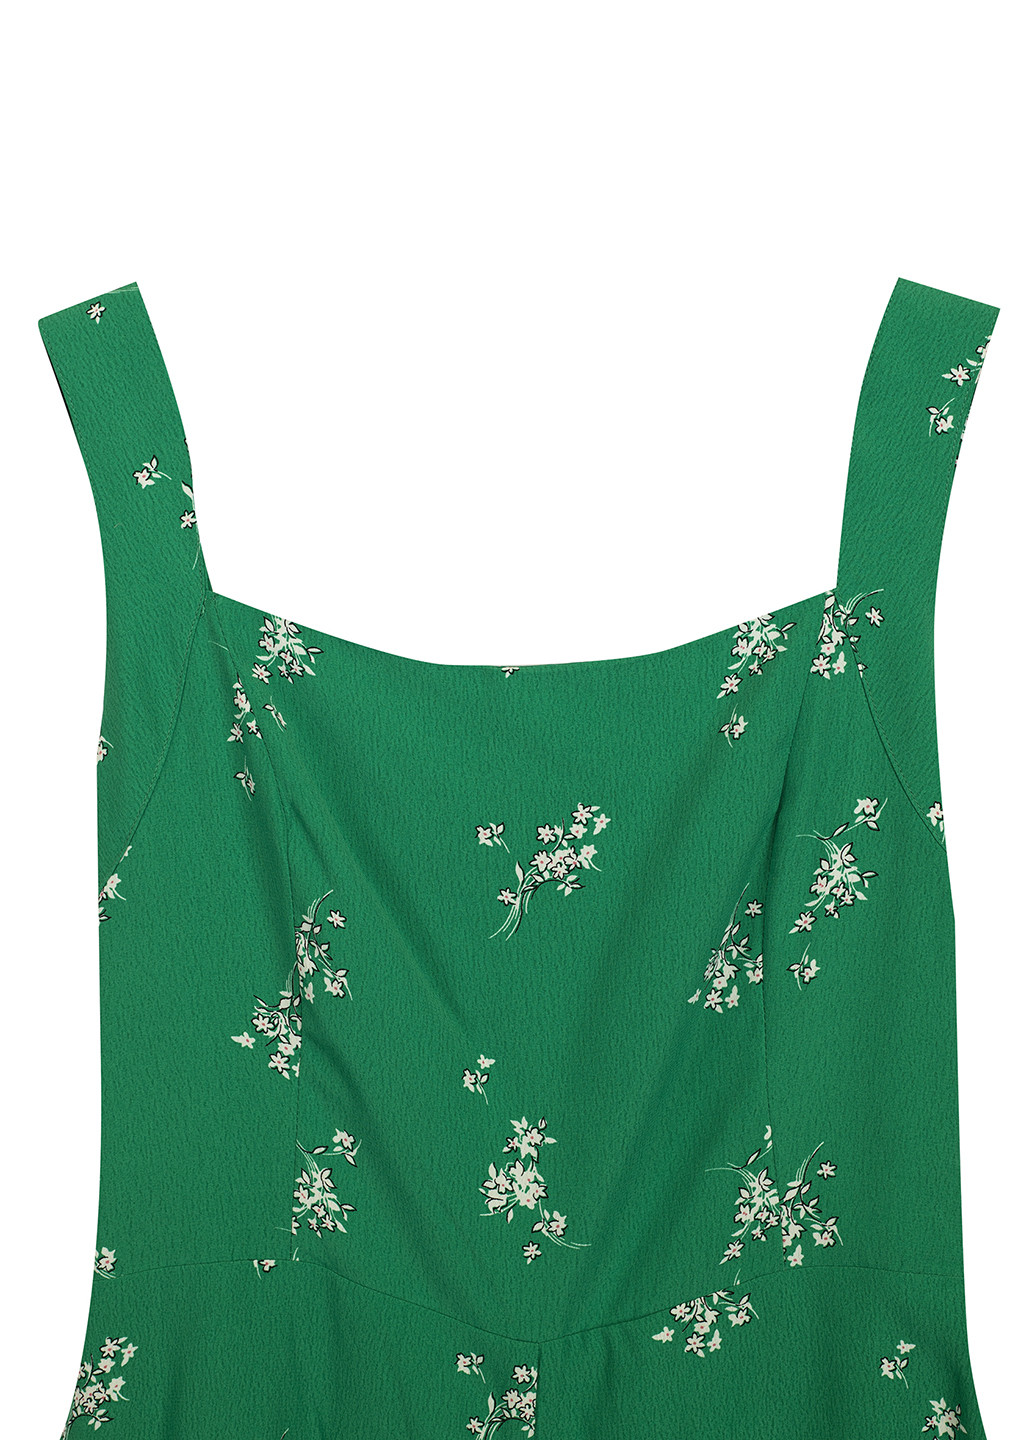 Комбинезон Gilli комбинезон-шорты цветочный зелёный кэжуал полиэстер